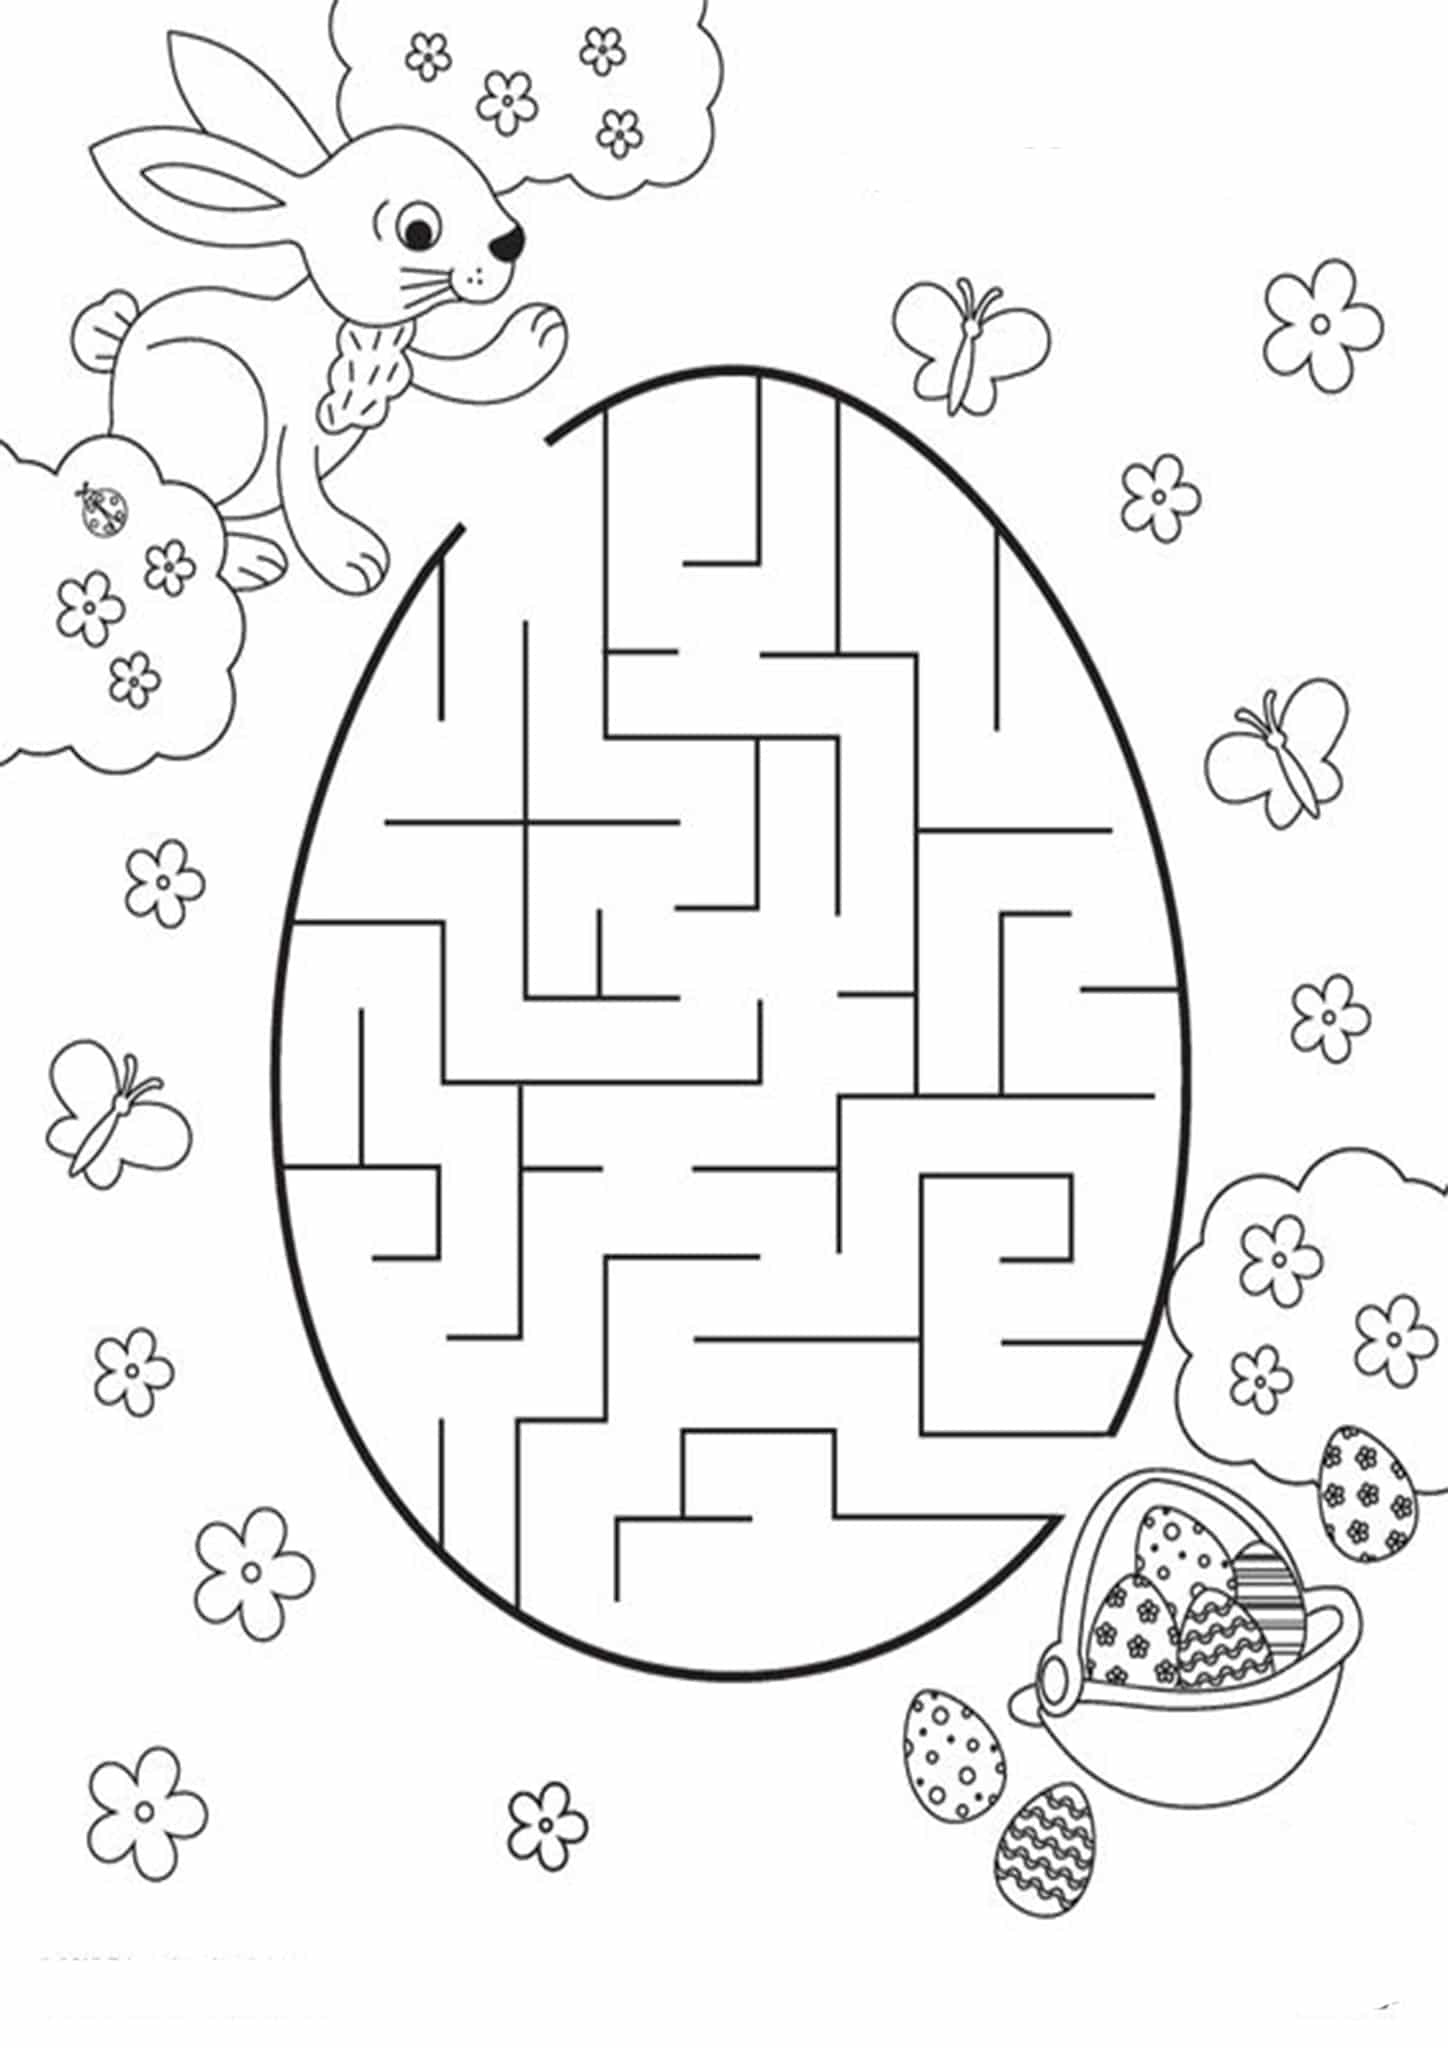 Simple Maze Printables for Preschoolers and Kindergartners